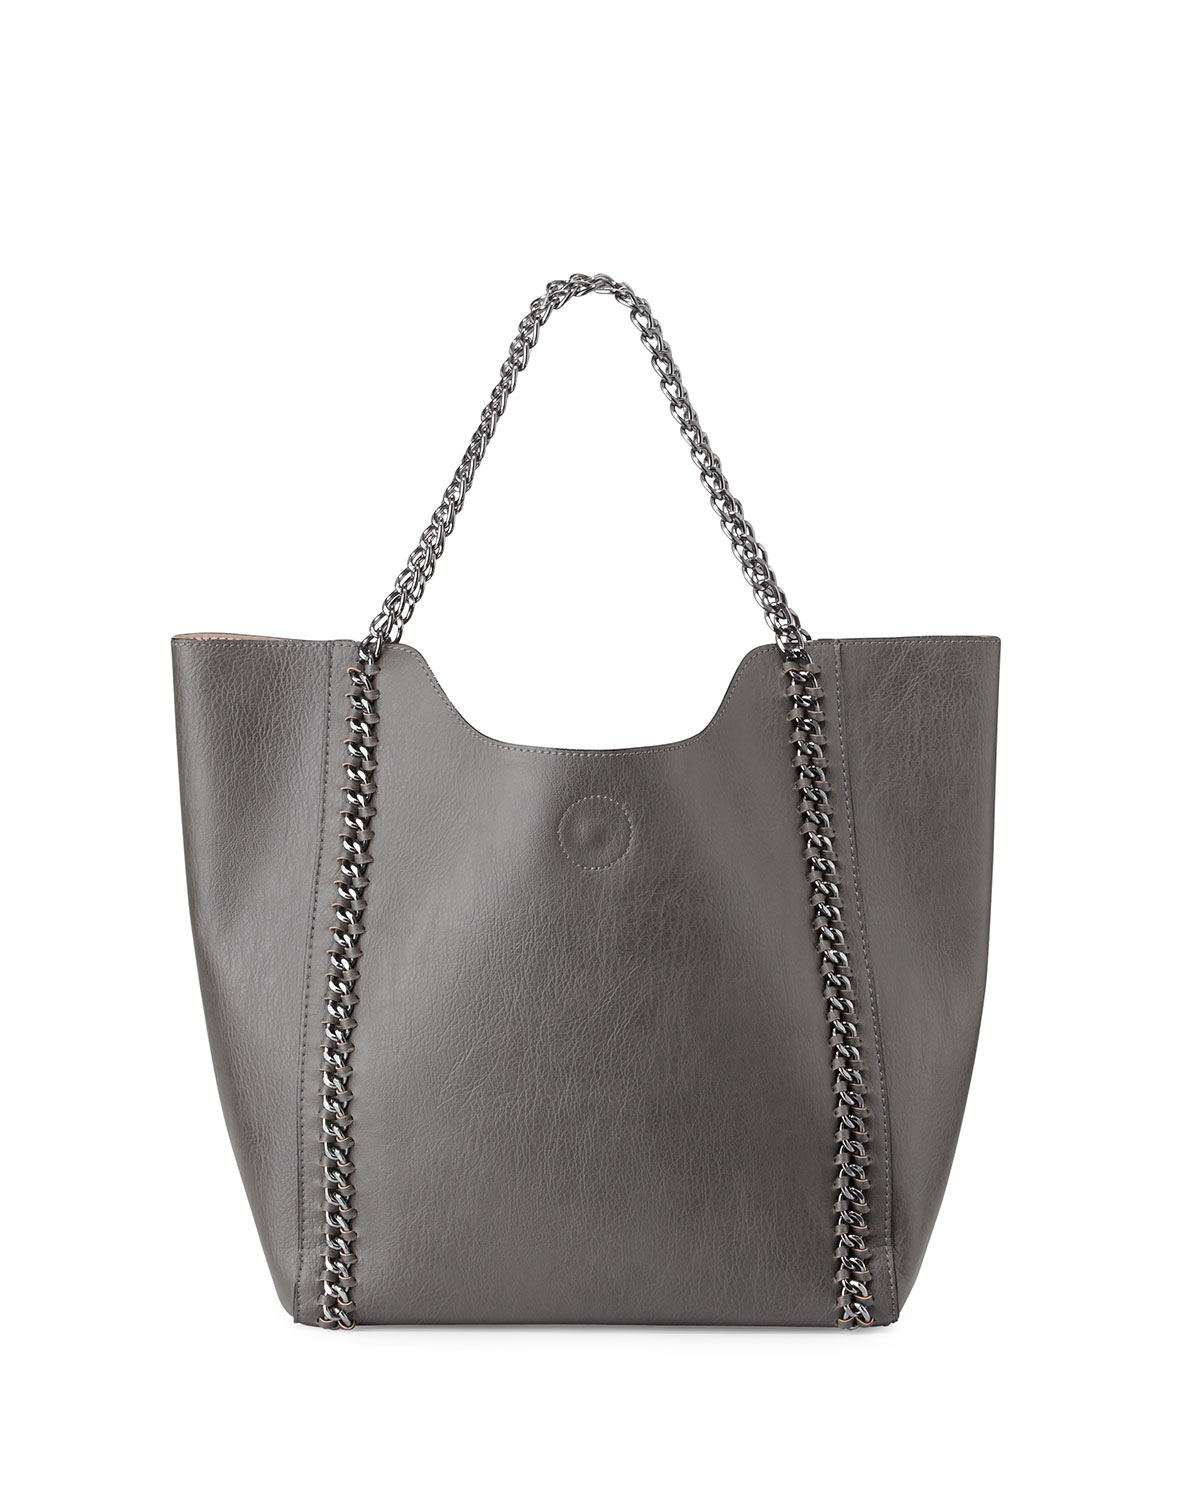 Neiman Marcus Handbags For Women | IQS Executive